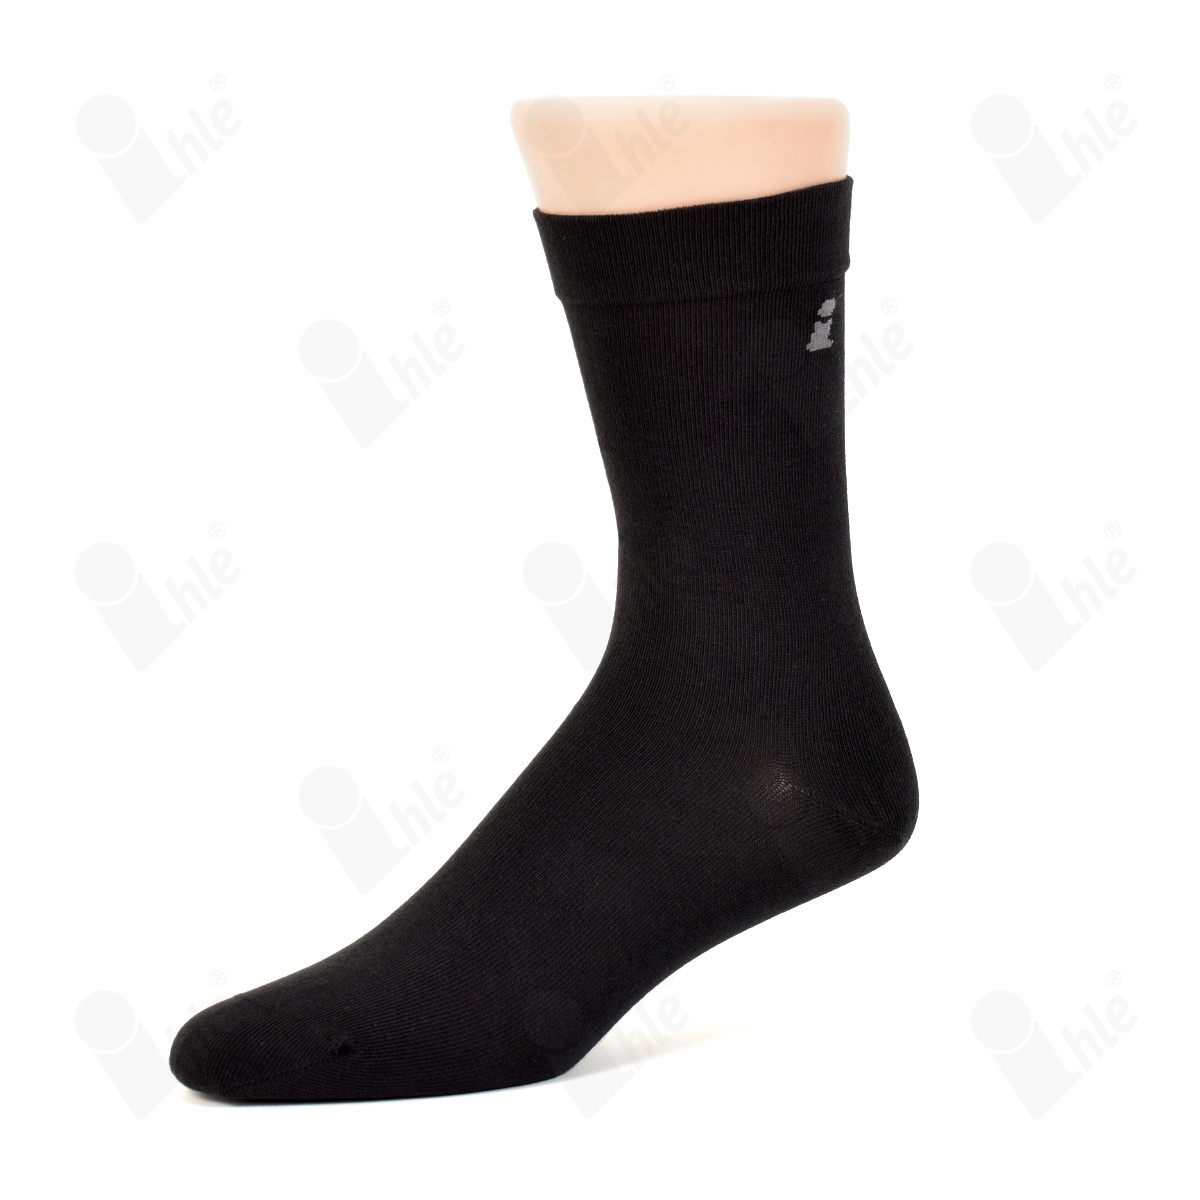 Ihle Socke klassisch schwarz Gr. 35-38